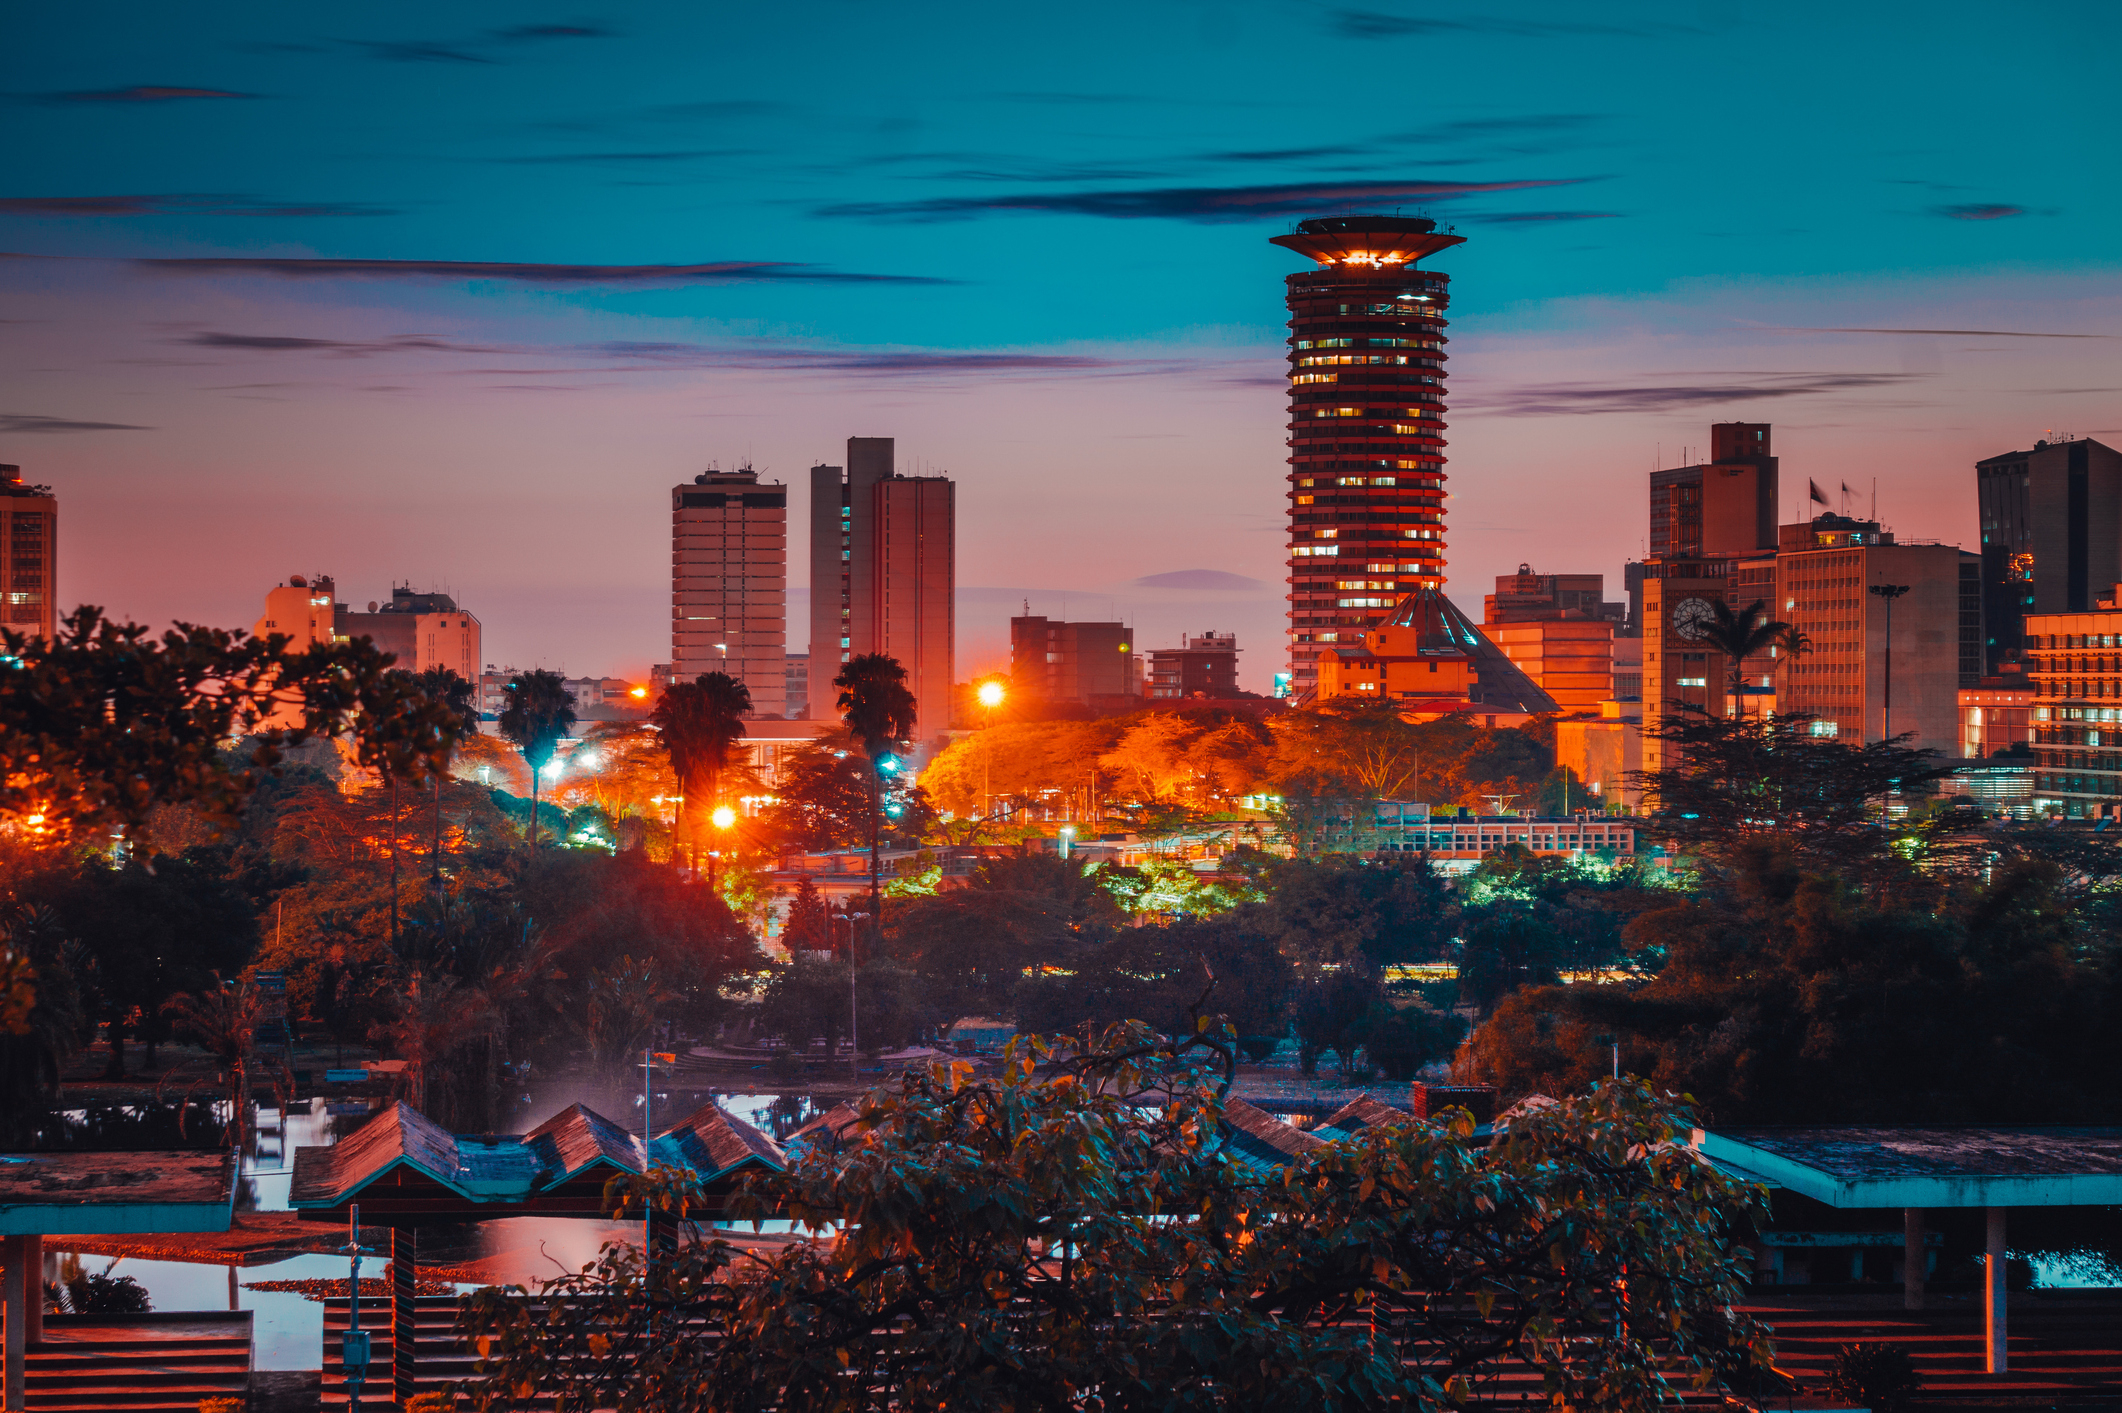 City skyline during twilight with illuminated buildings